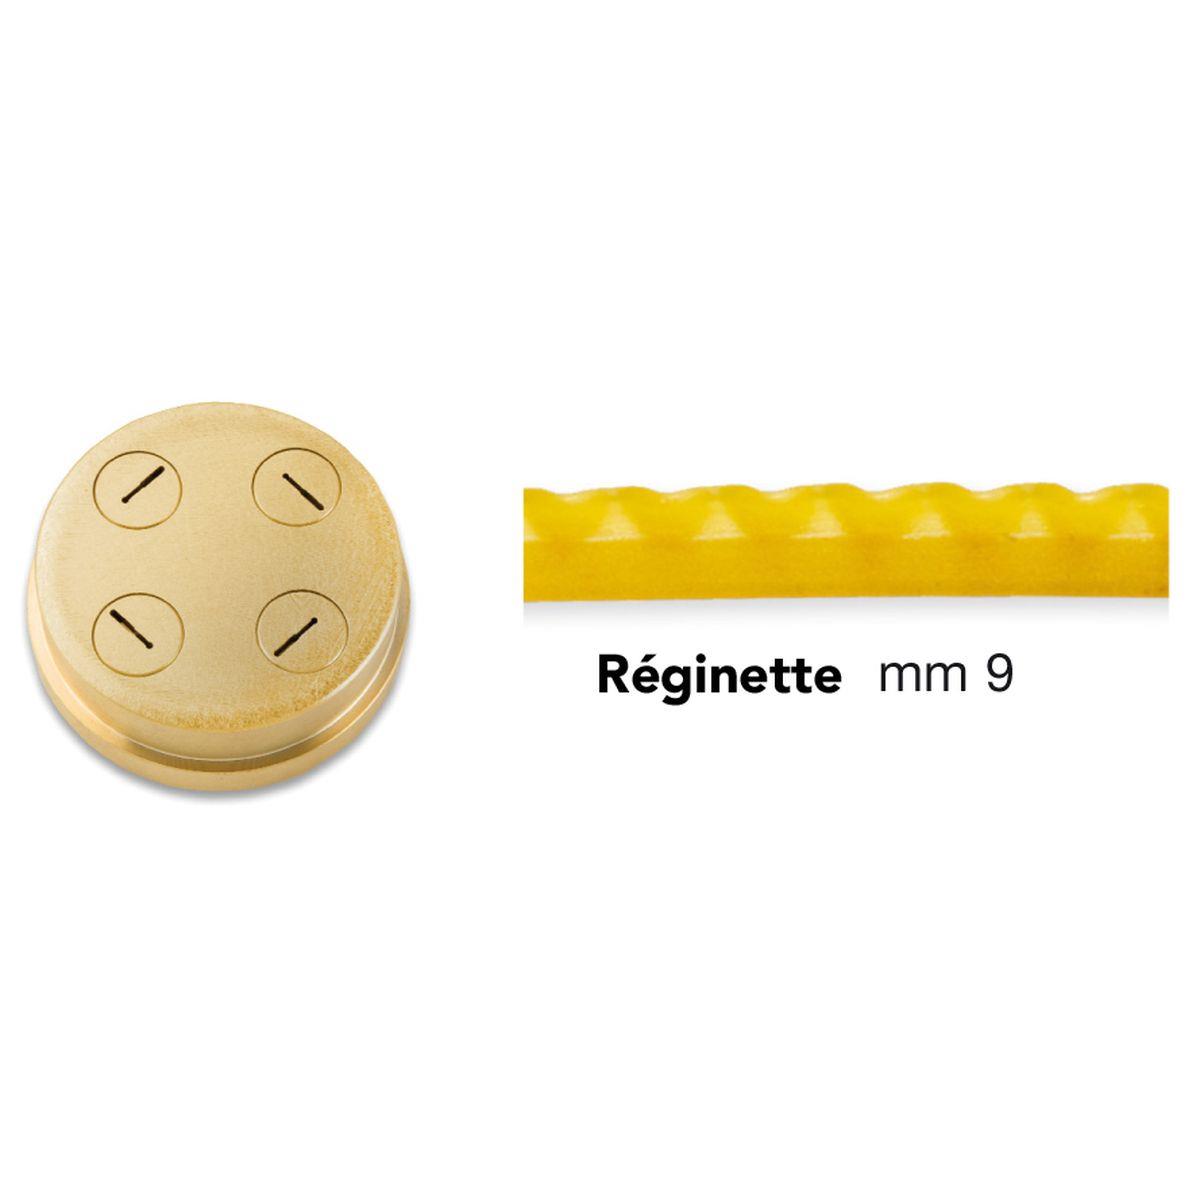 Imperia - Bronze Die 284 for Reginette for Home Chef pasta machine